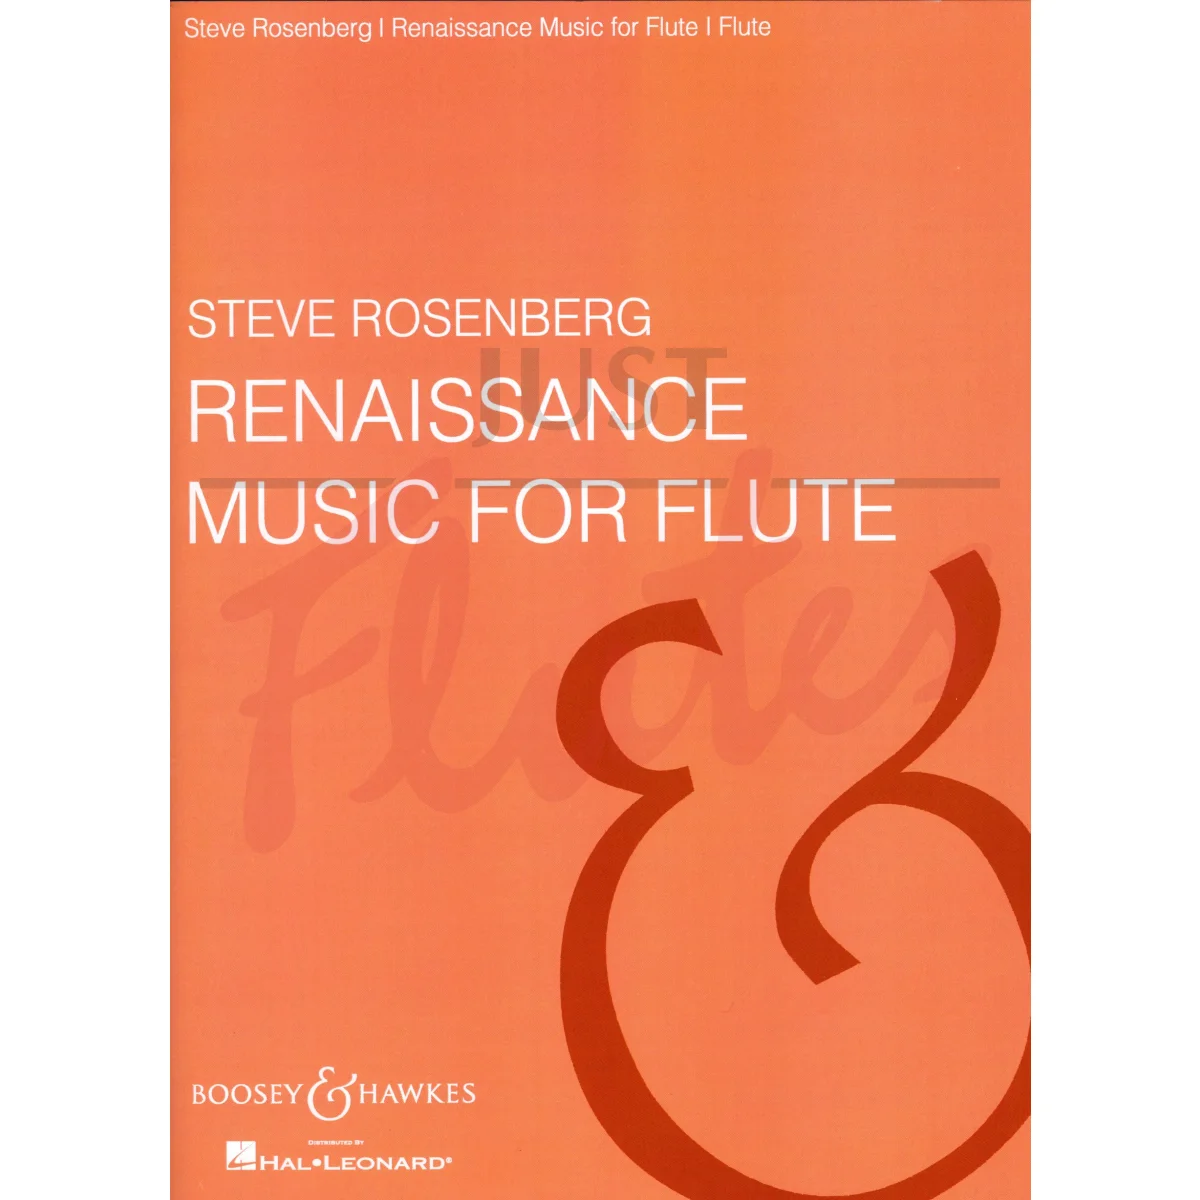 Renaissance Music for Flute